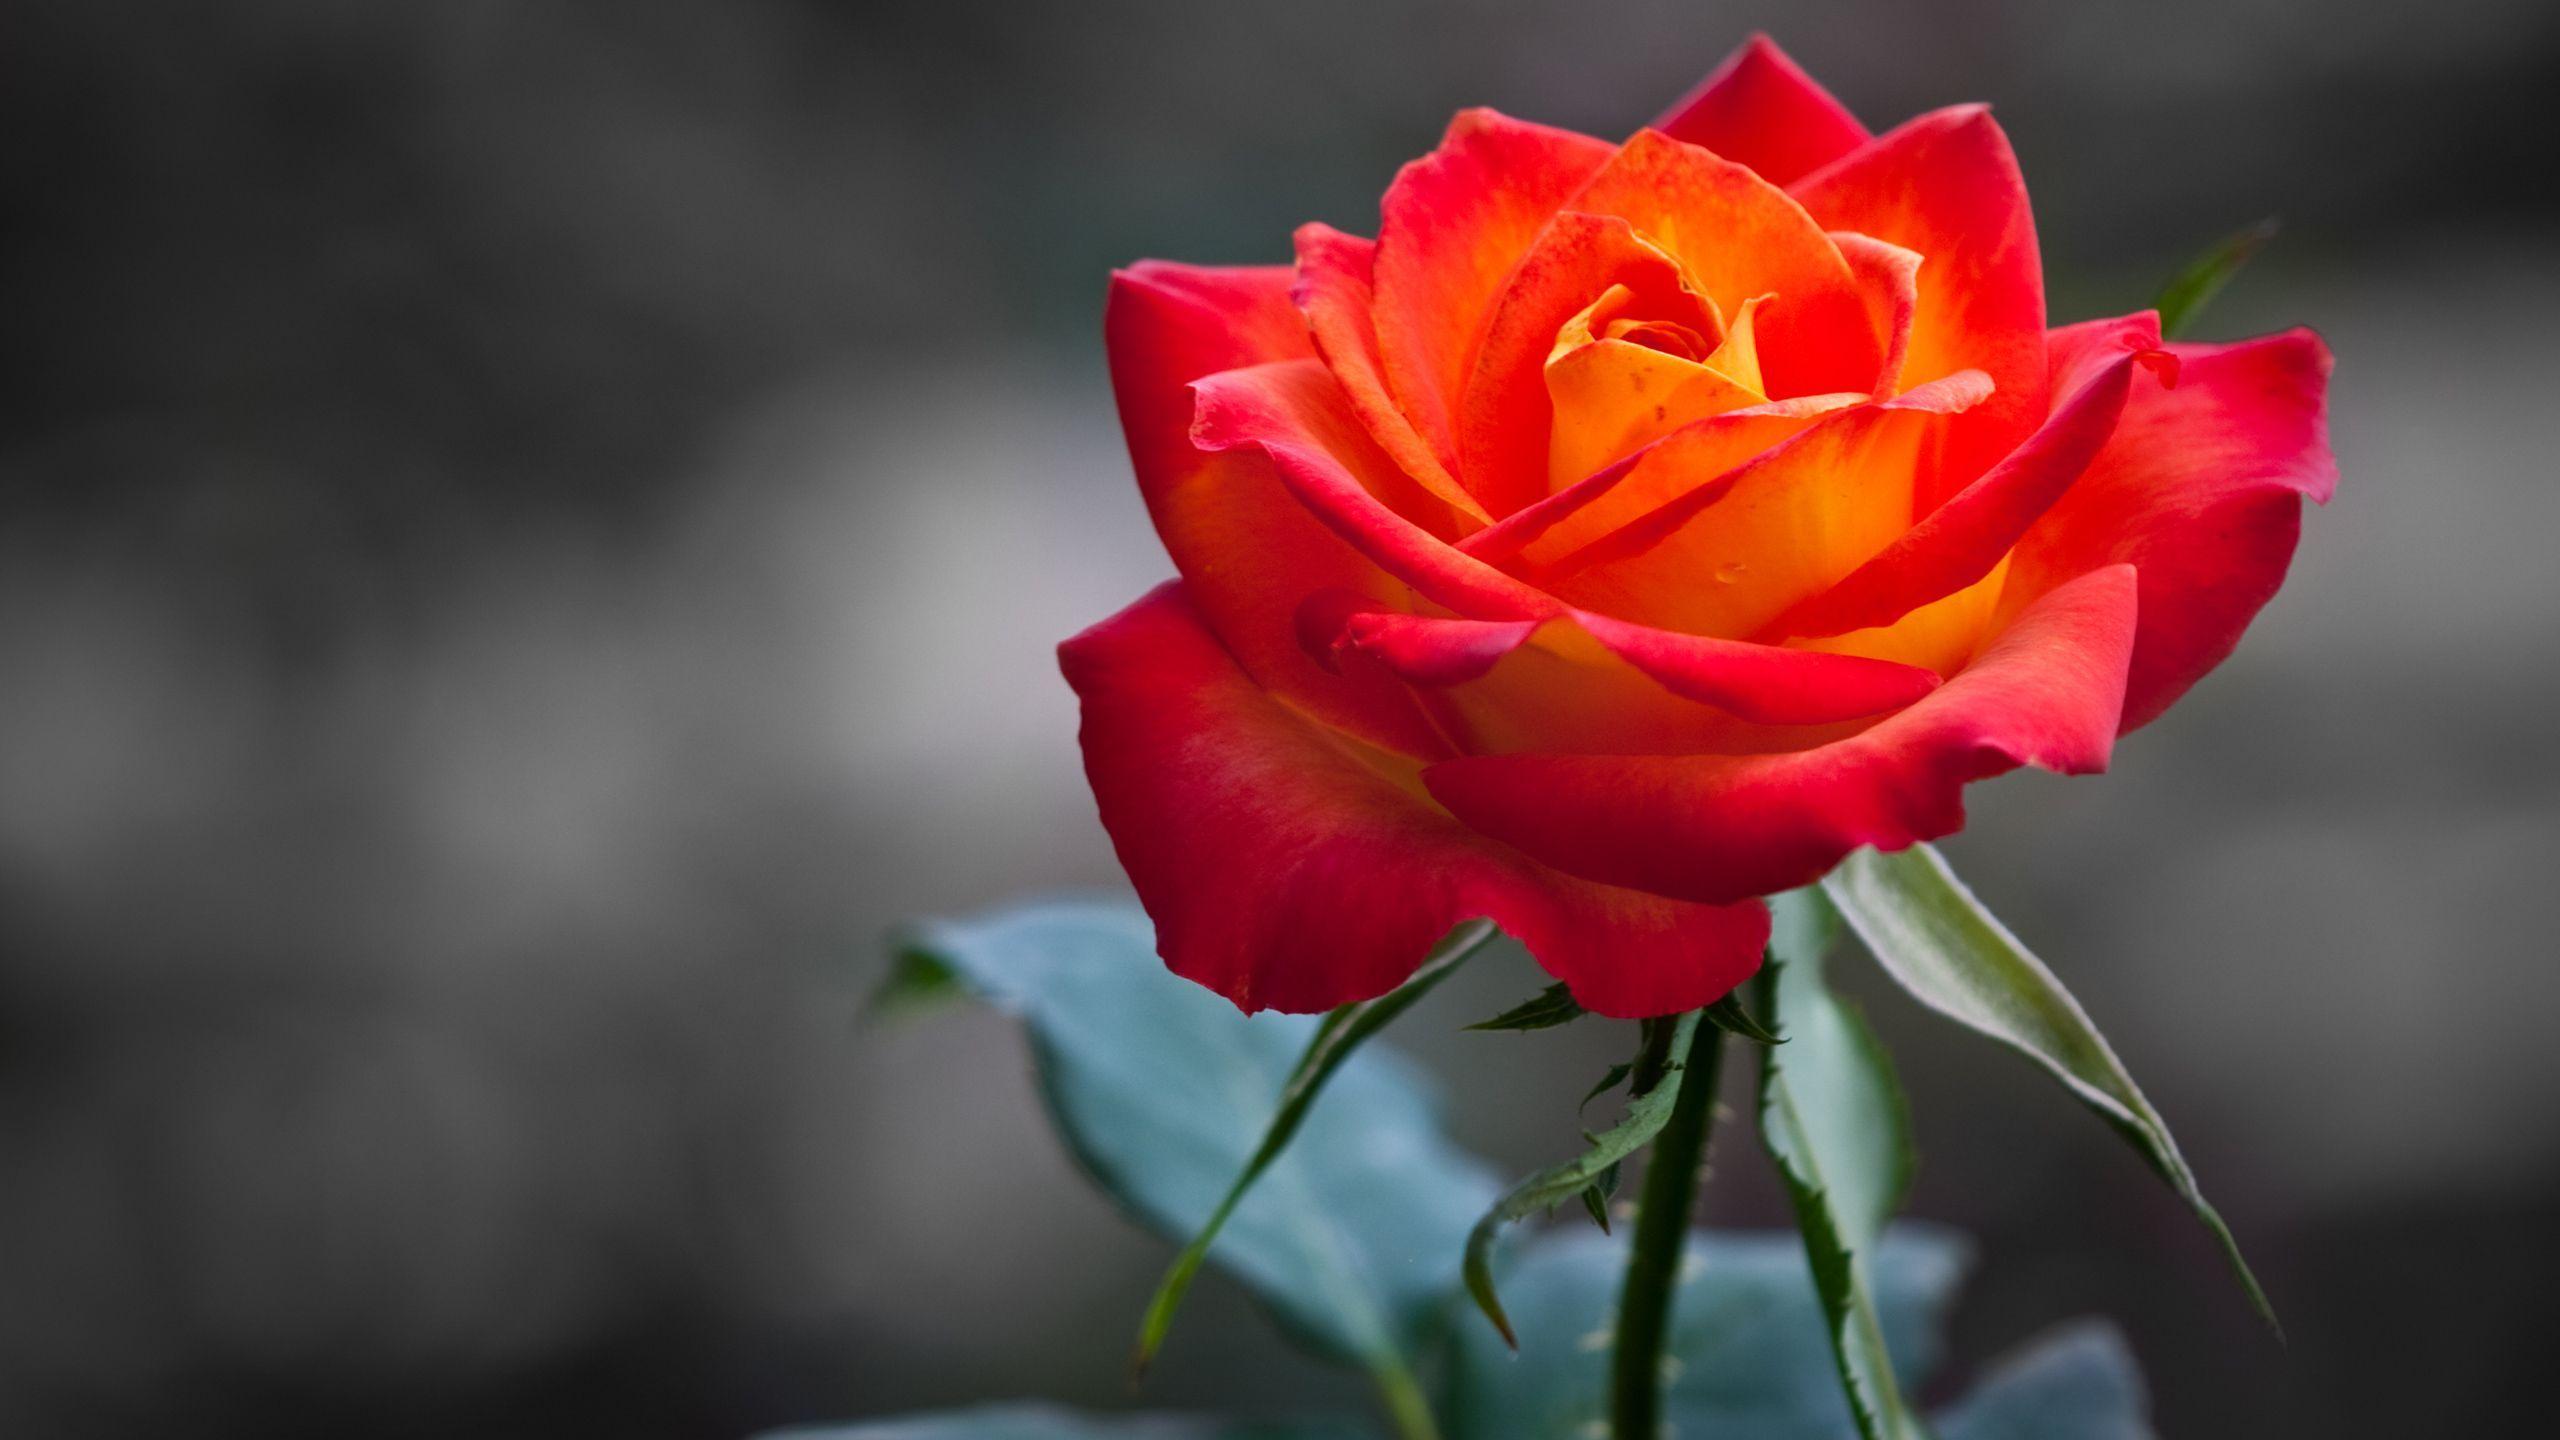 Beautiful Images Of Orange Roses